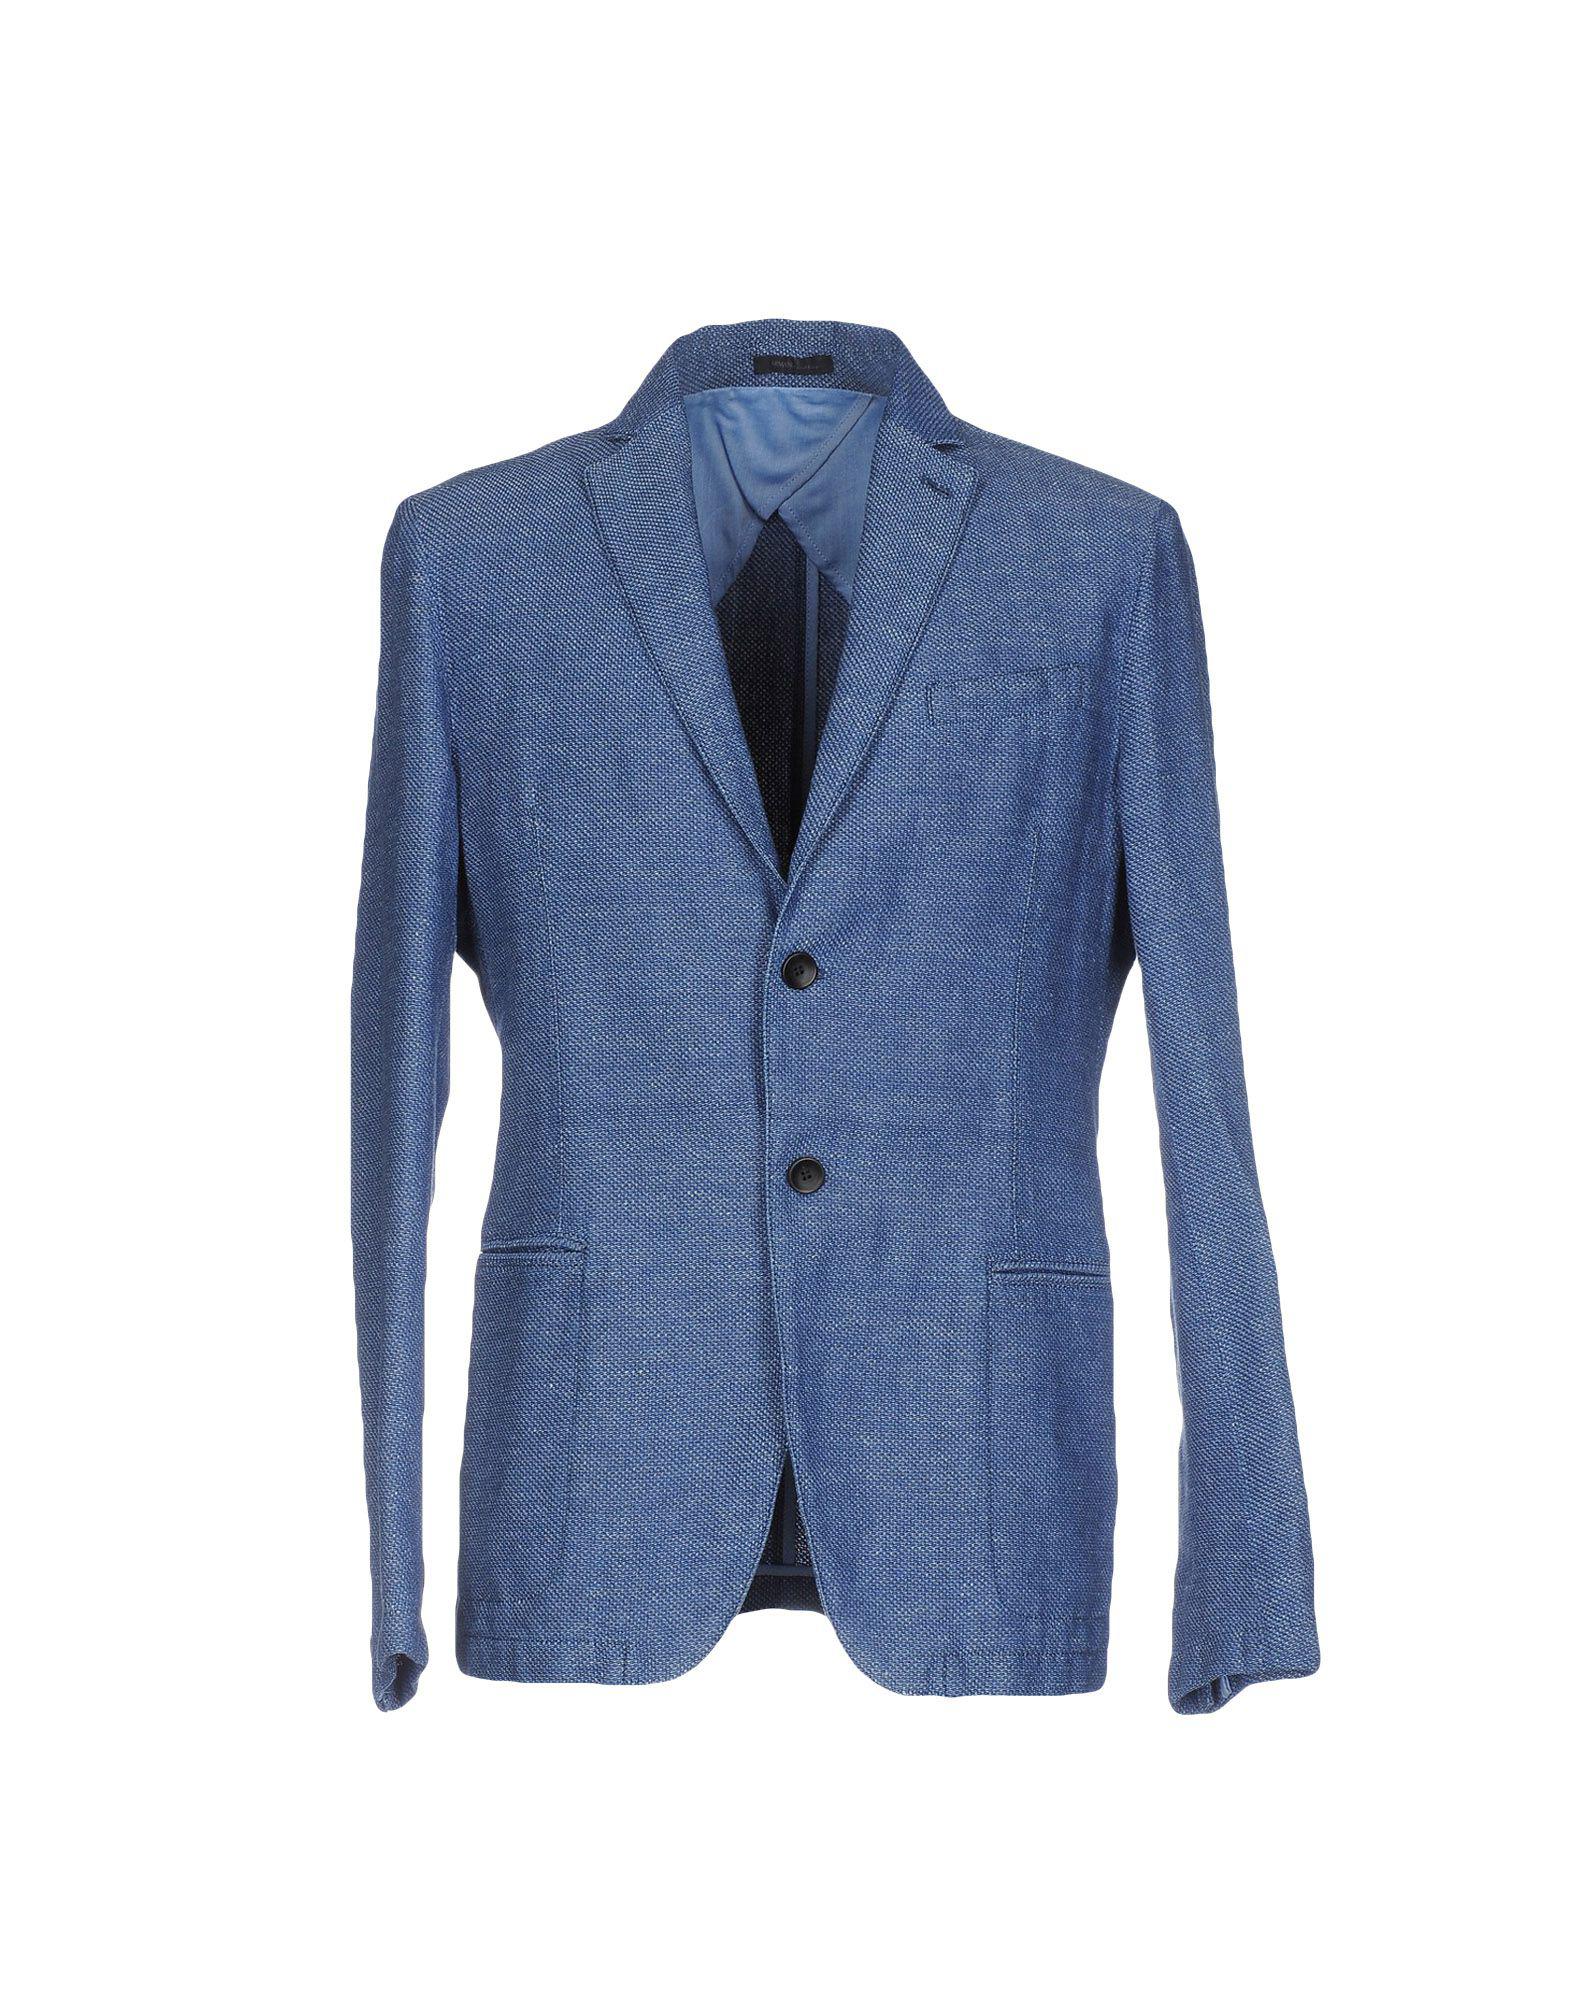 Armani Cotton Blazer in Blue for Men - Lyst